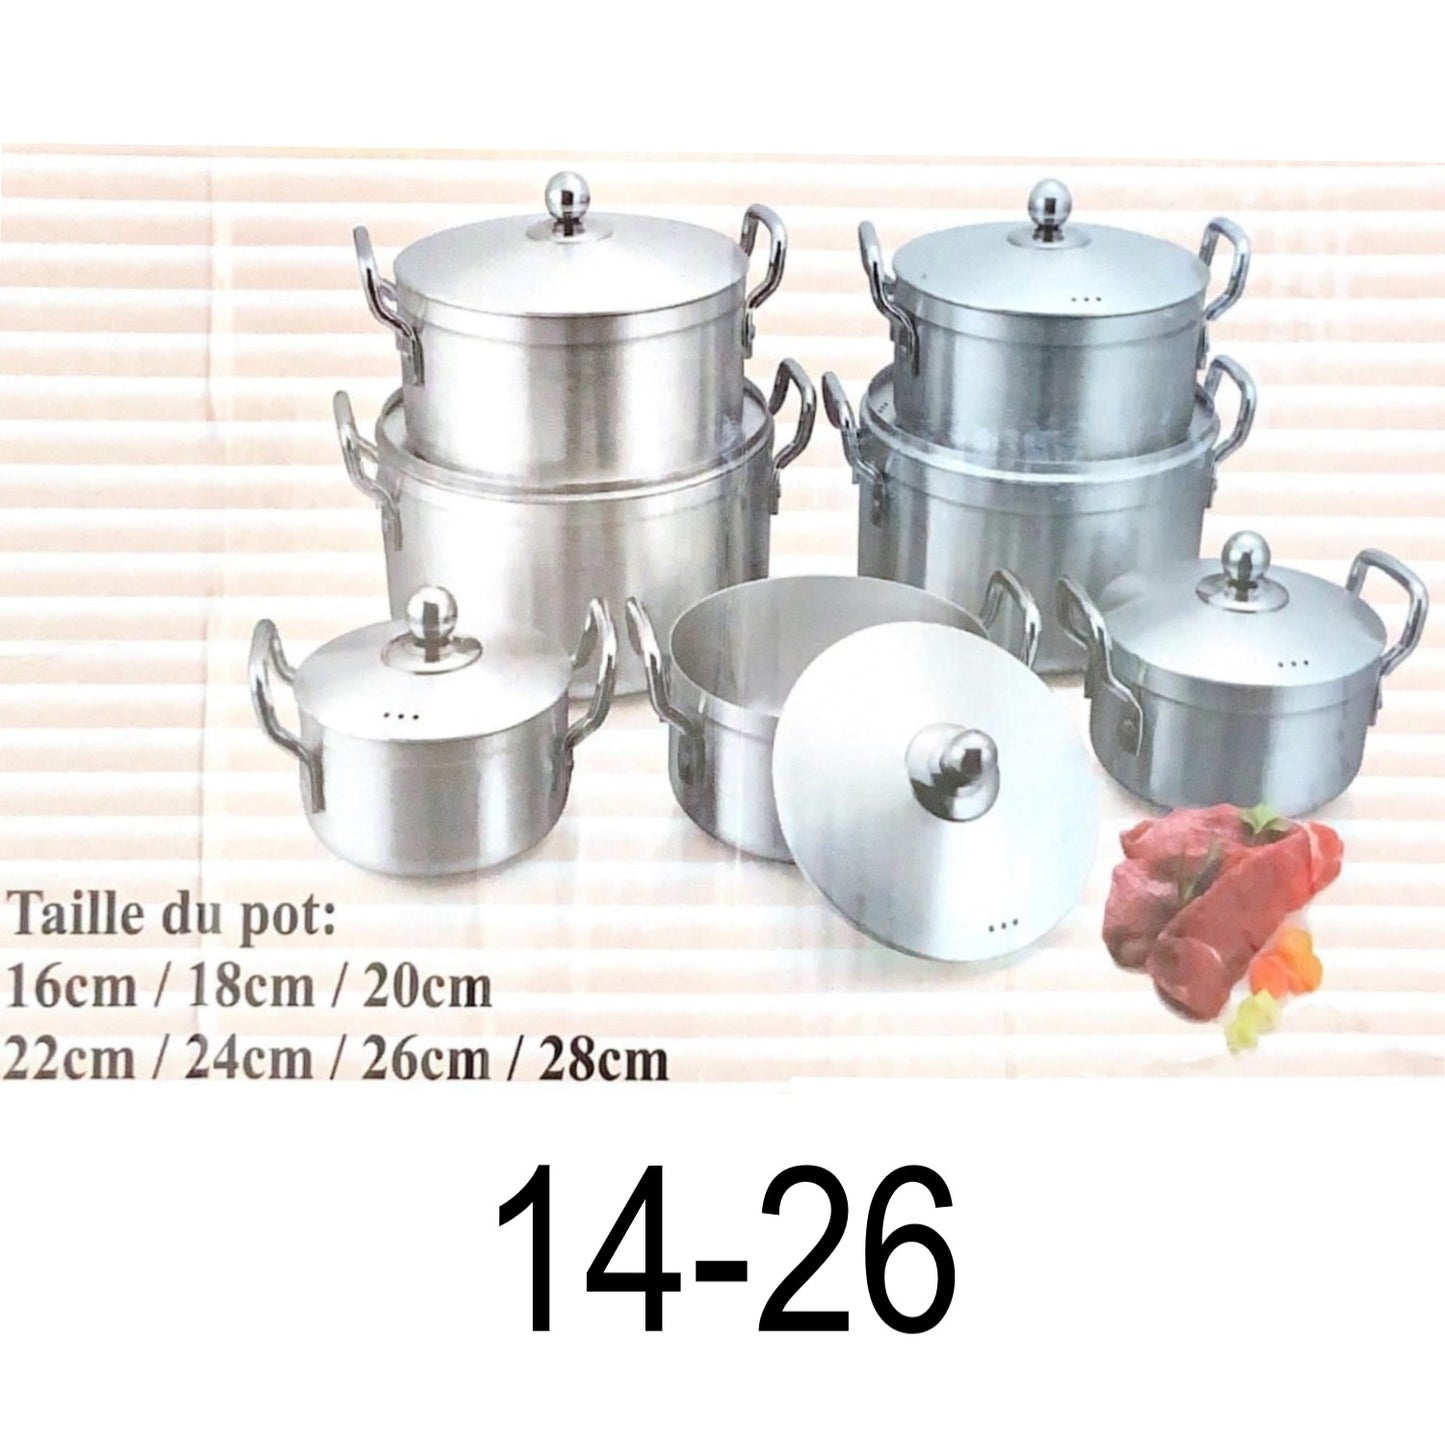 Aluminum Yattoko Pot 7.8 (18cm)